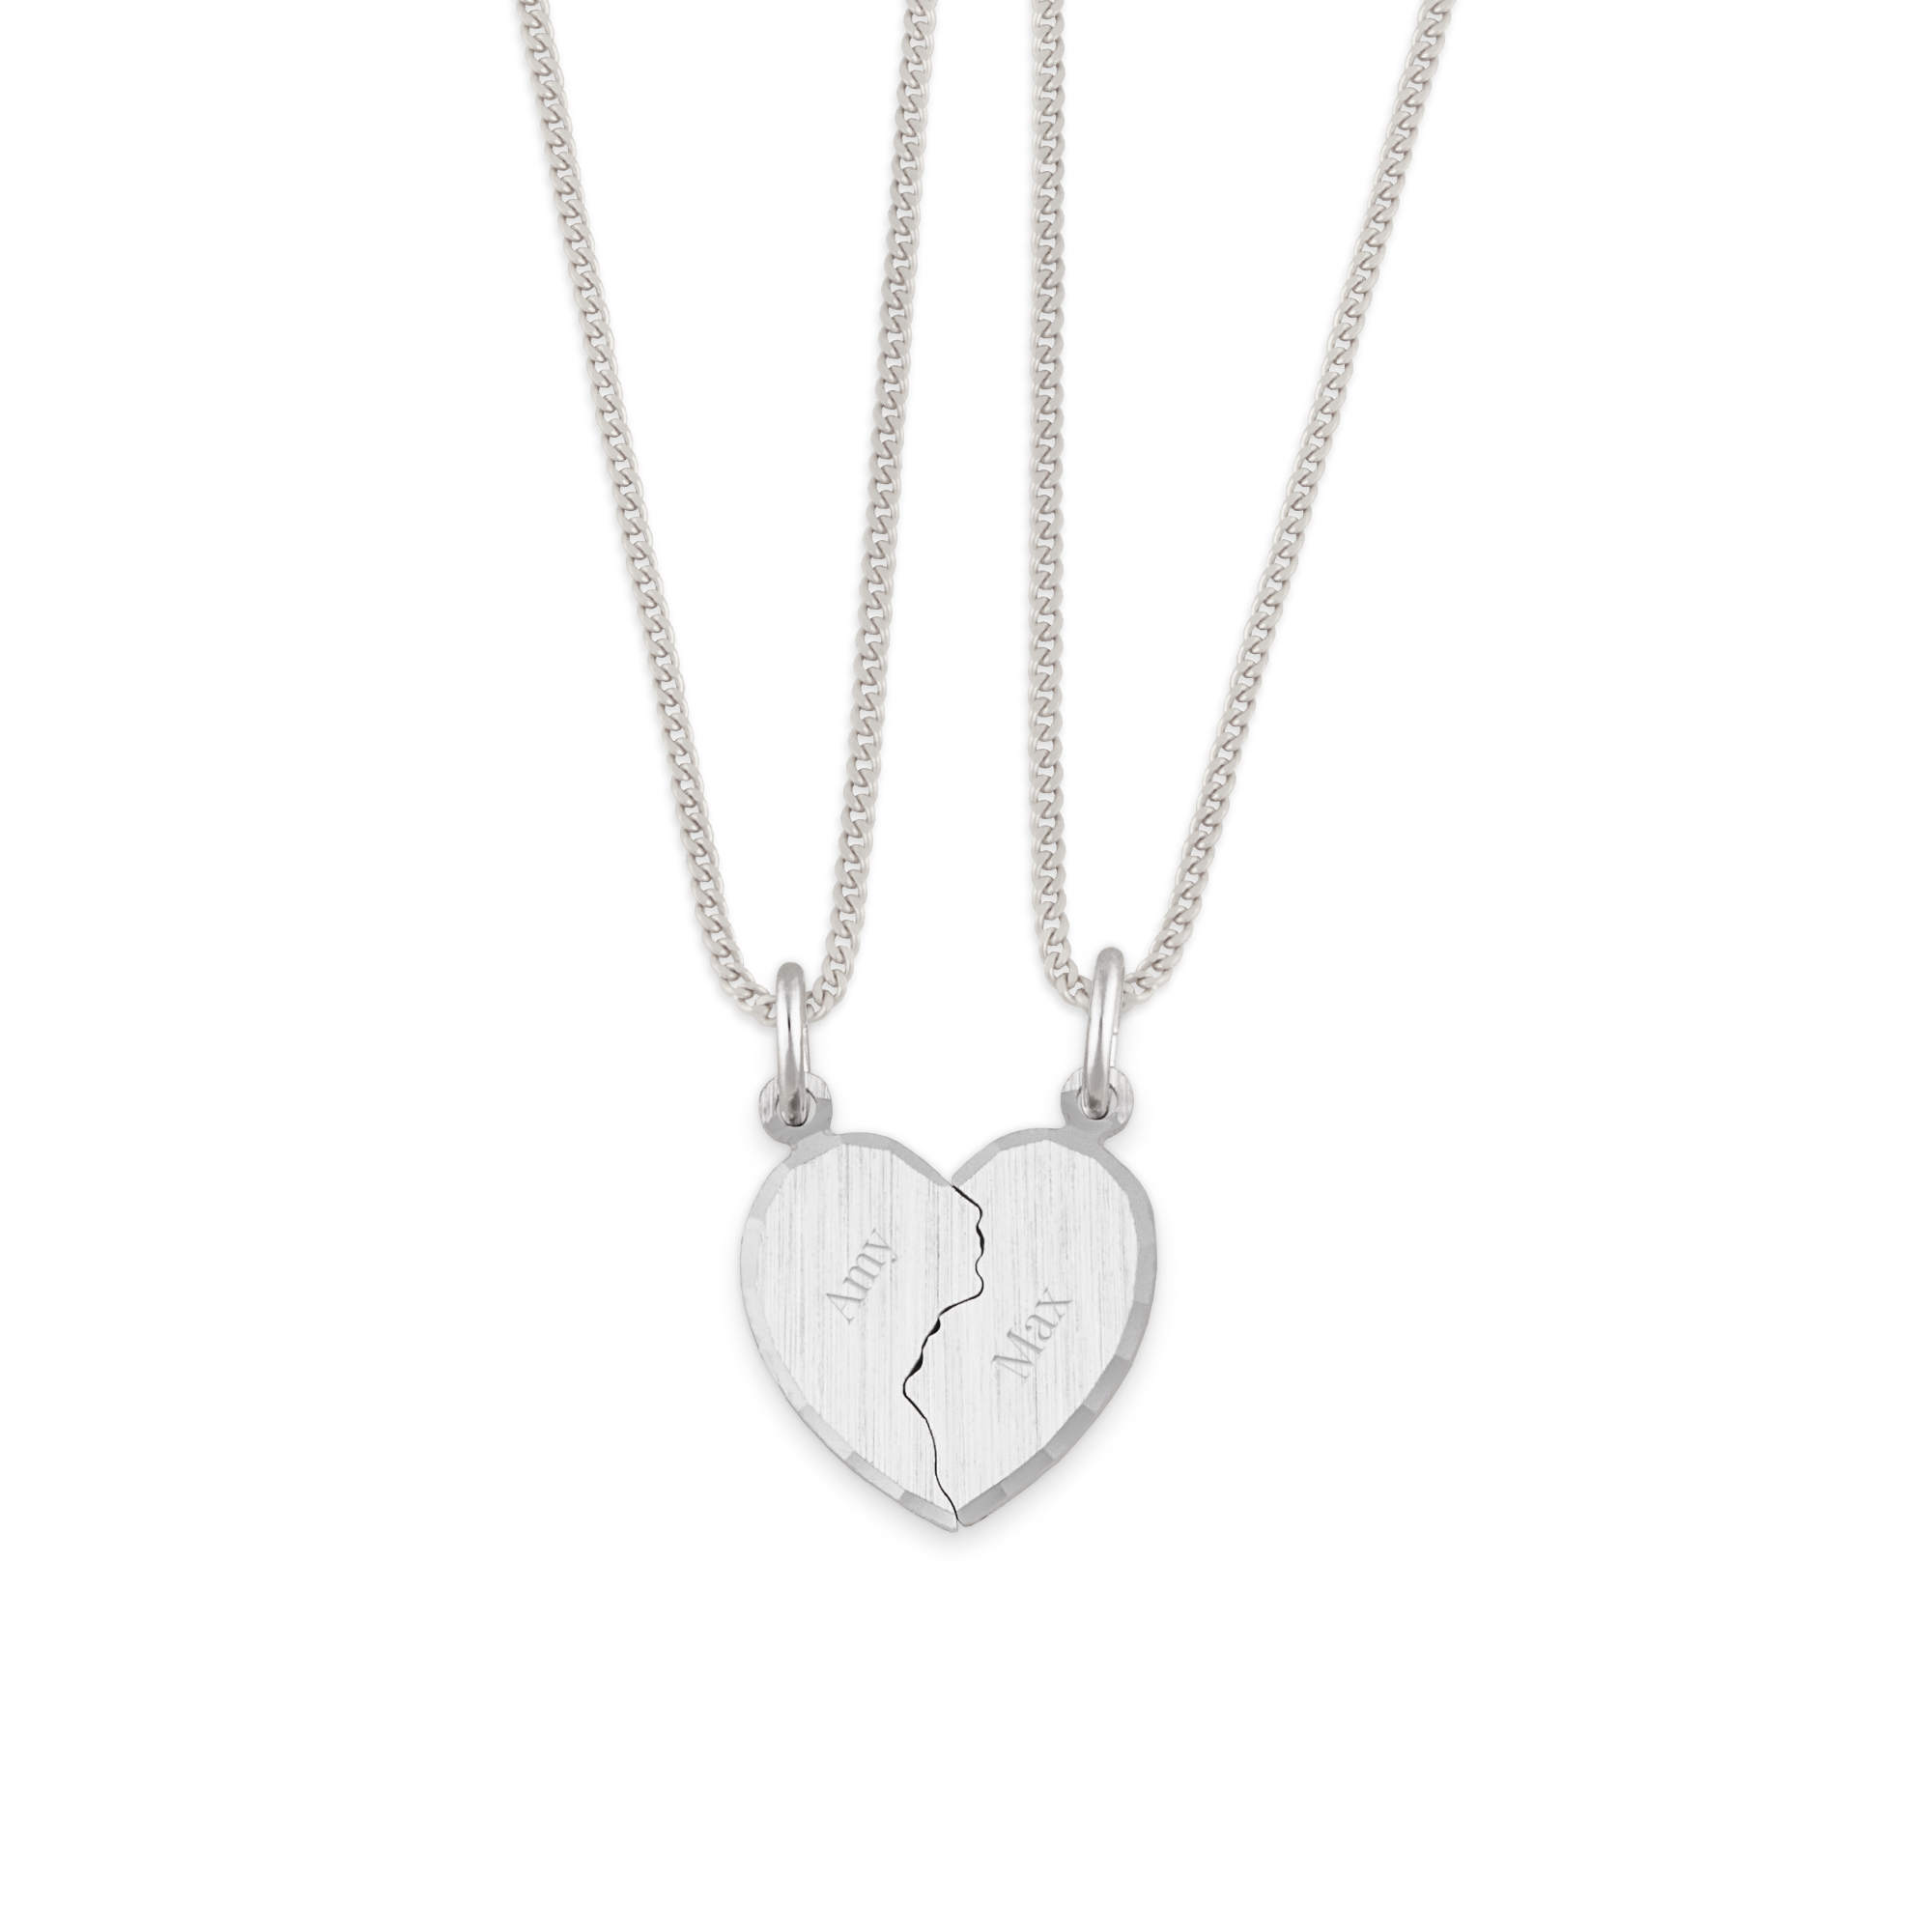 Silver pendant - Broken heart